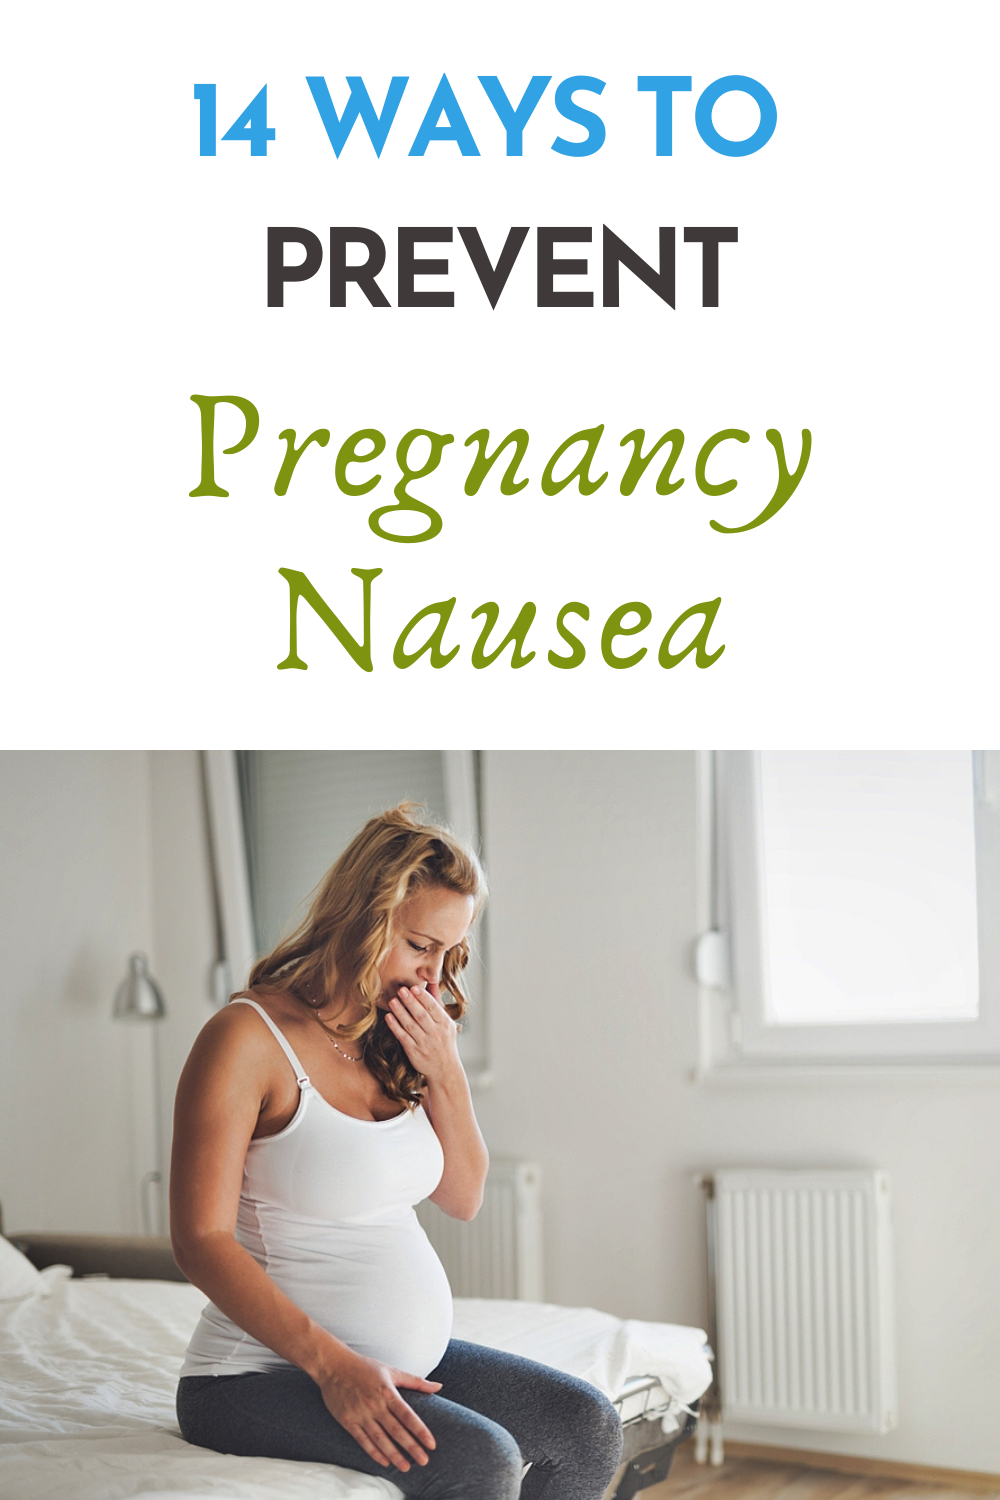 14 Ways to Prevent Pregnancy Nausea